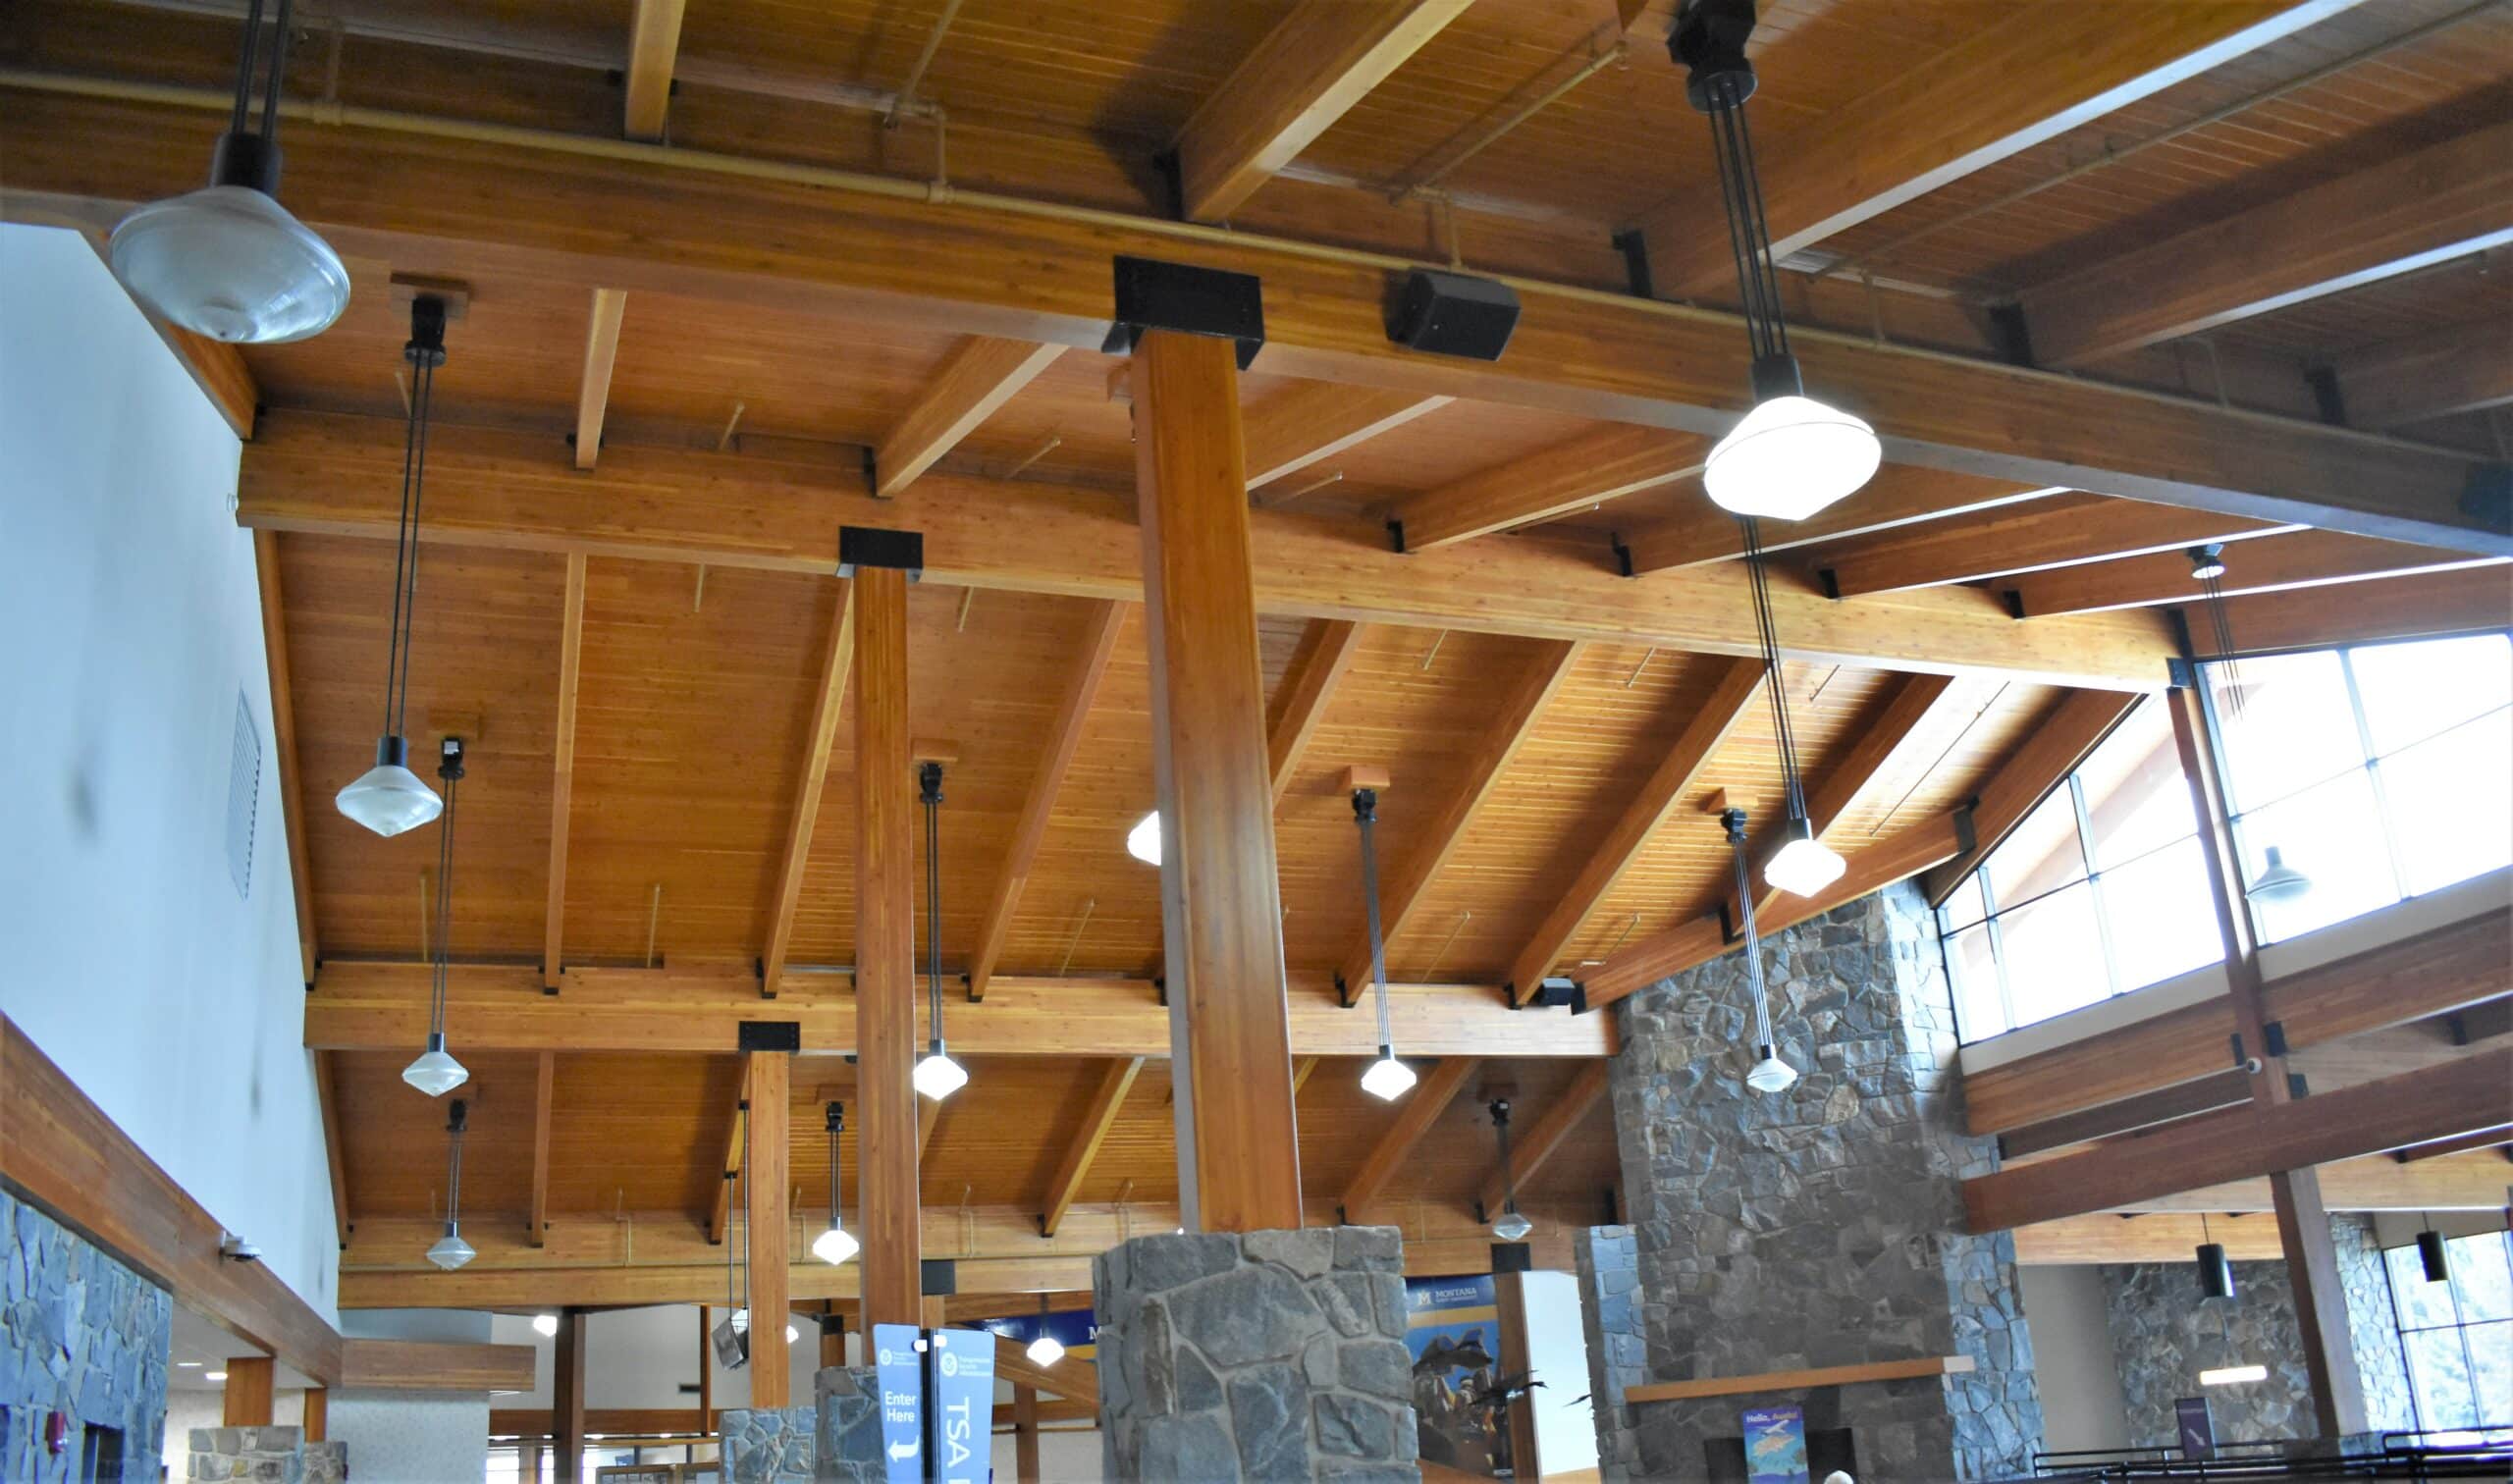 QB Corporation's Ridge and Rafter and Columns Glued laminated timber at QB Corporation at Bozeman Yellowstone International Airport